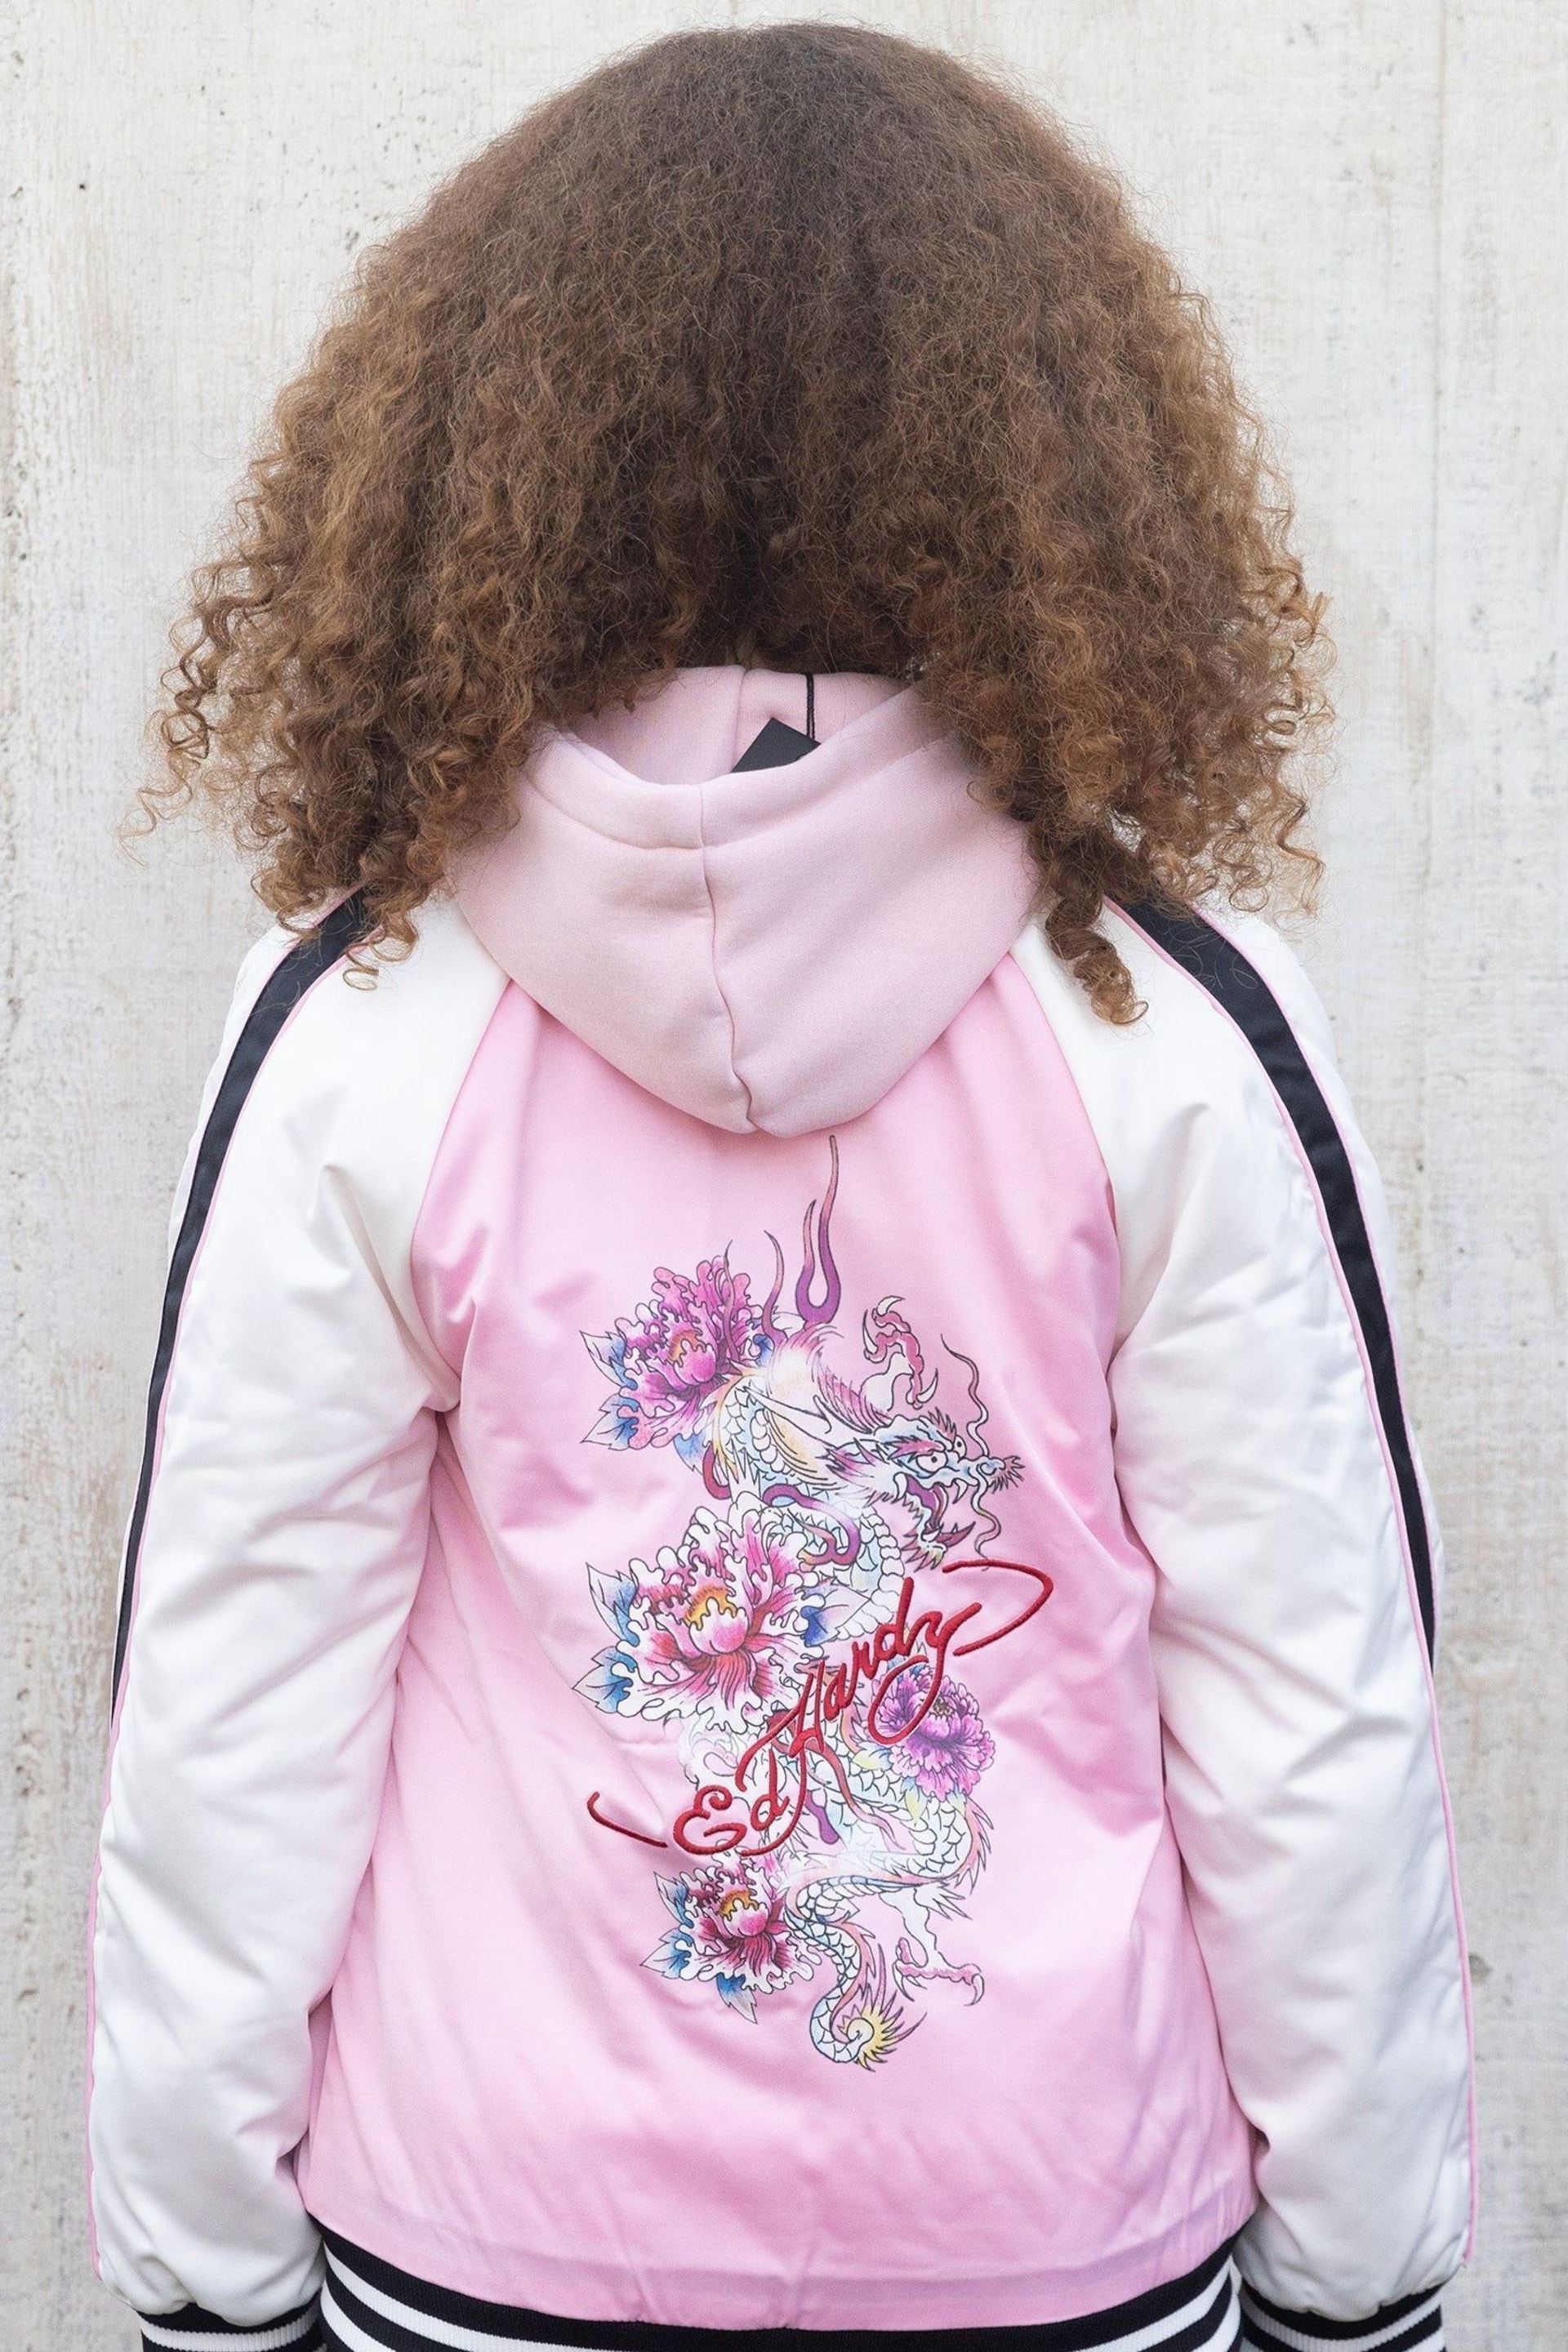 Hype X Ed Hardy Kids Pink Jacket Floral Souvenir Jacket - Image 1 of 3